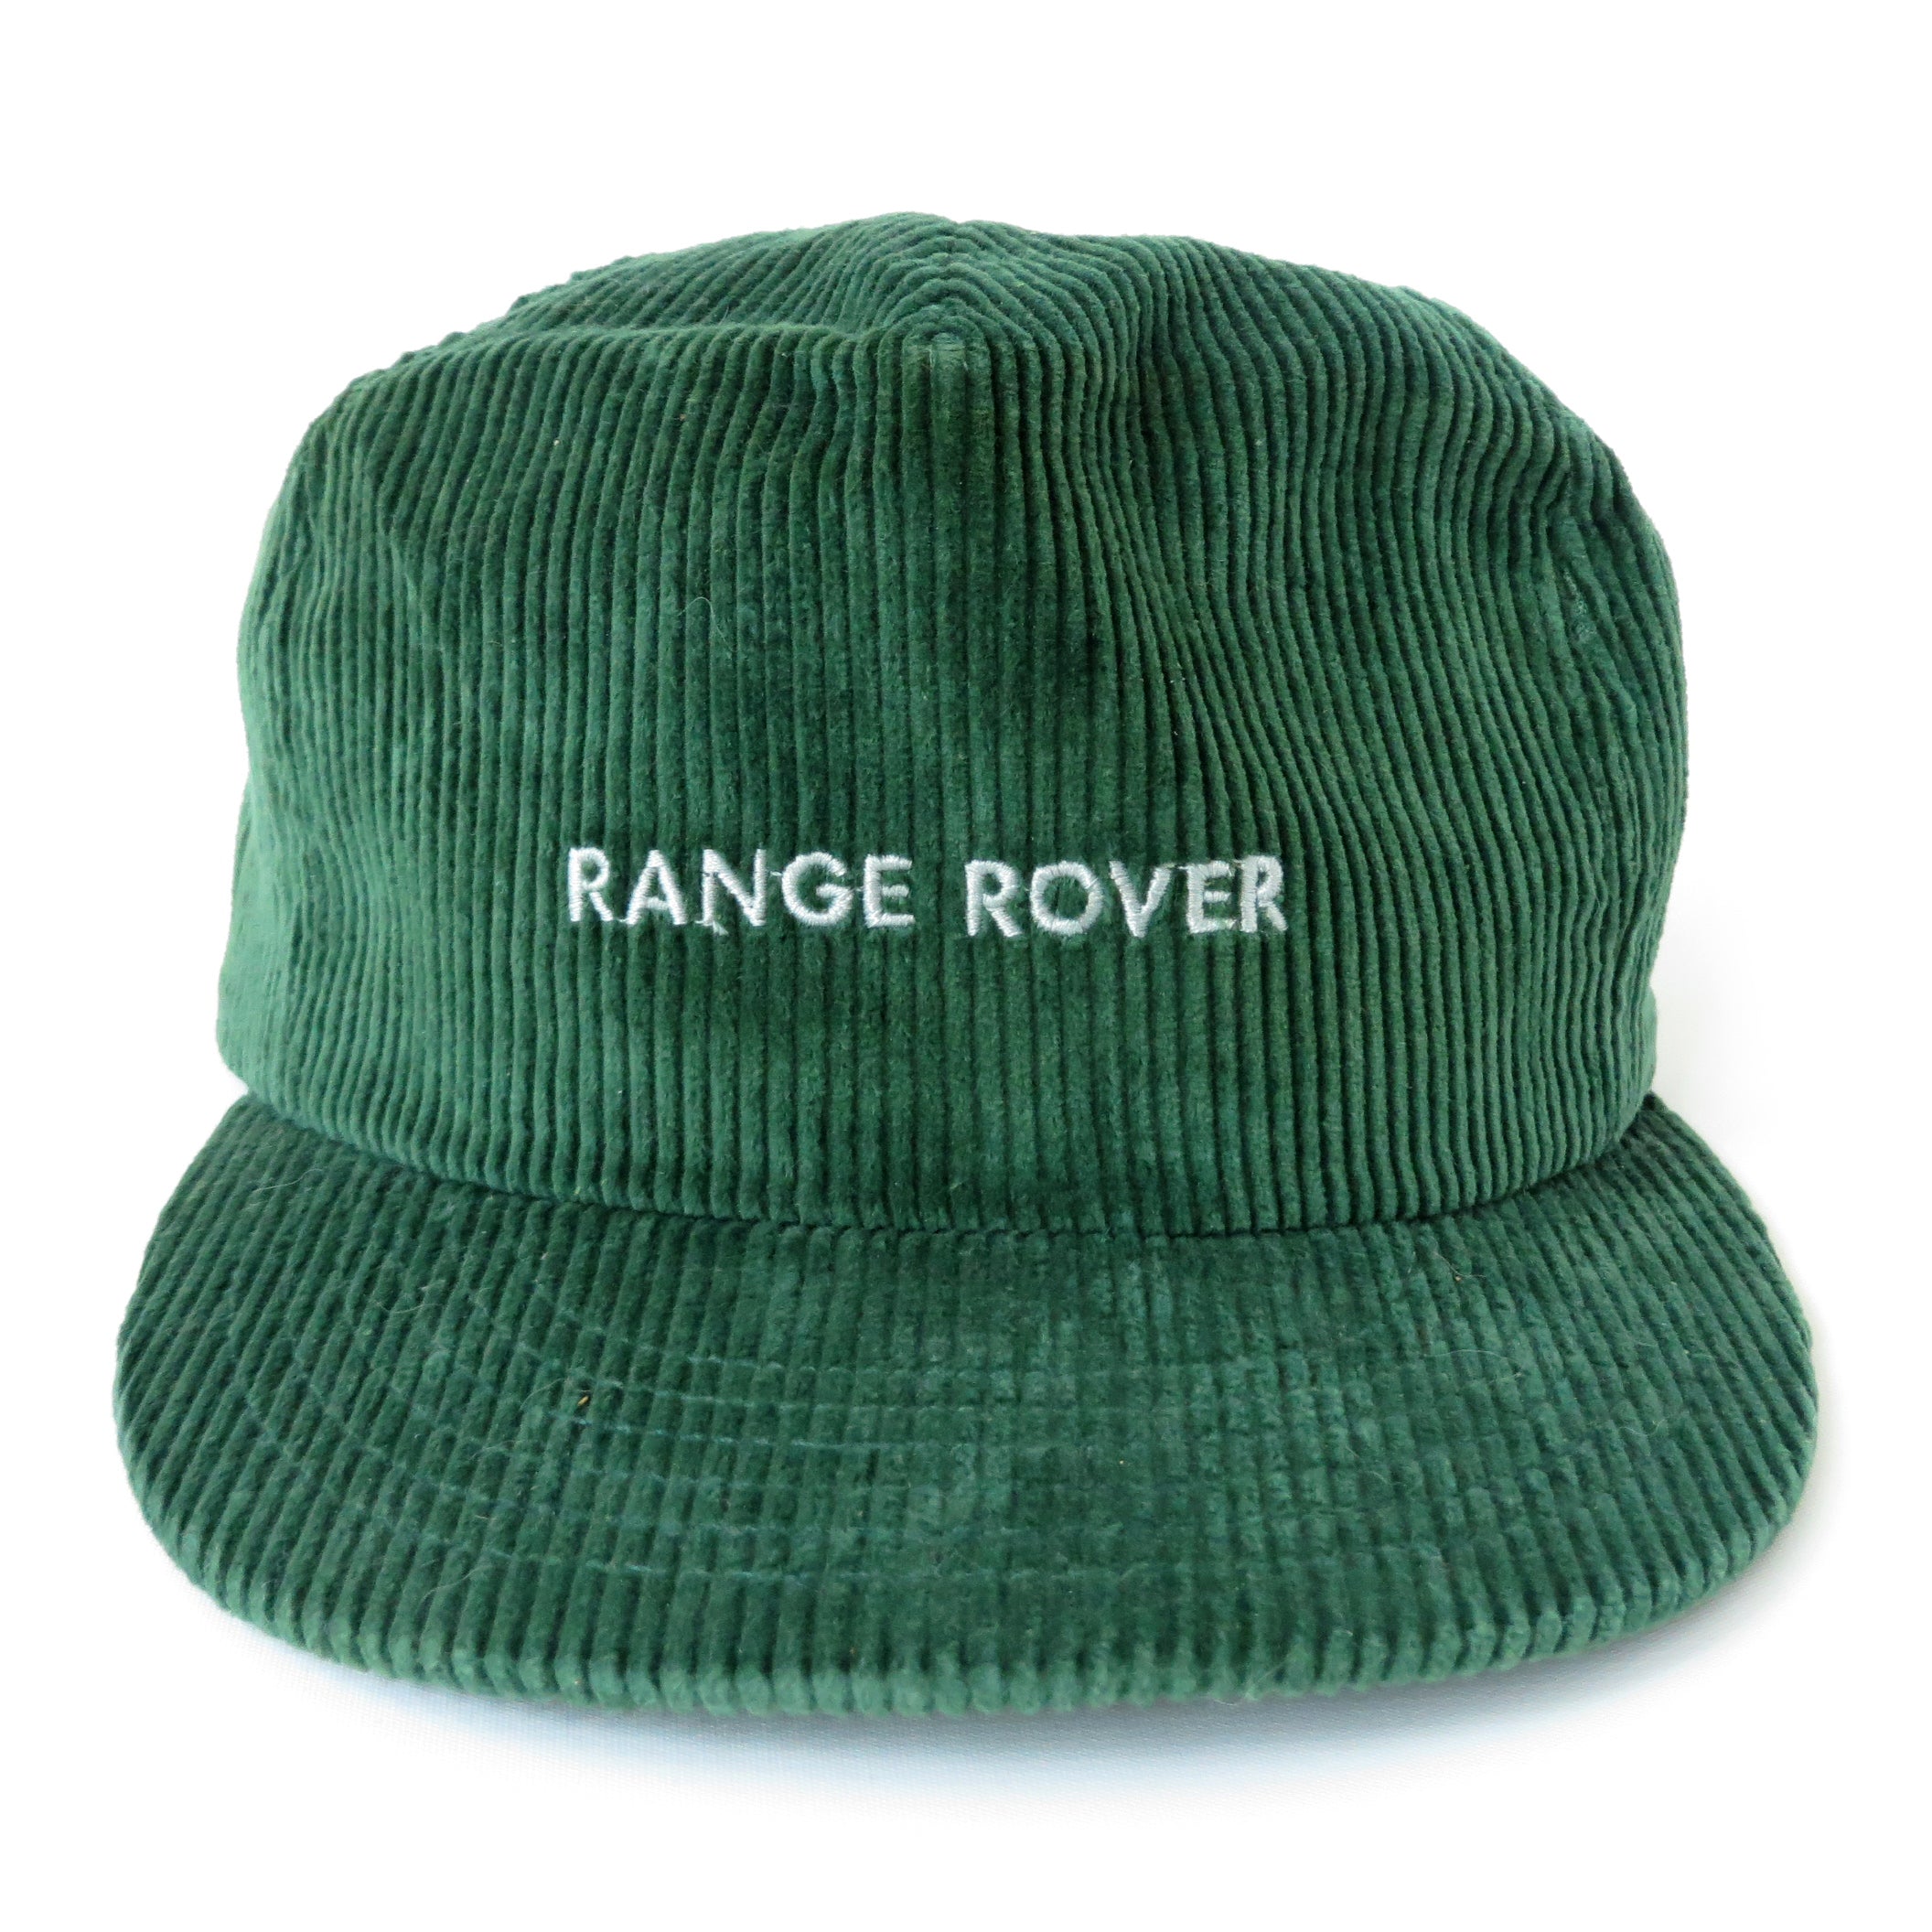 Vintage Range Rover Corduroy Strapback Hat